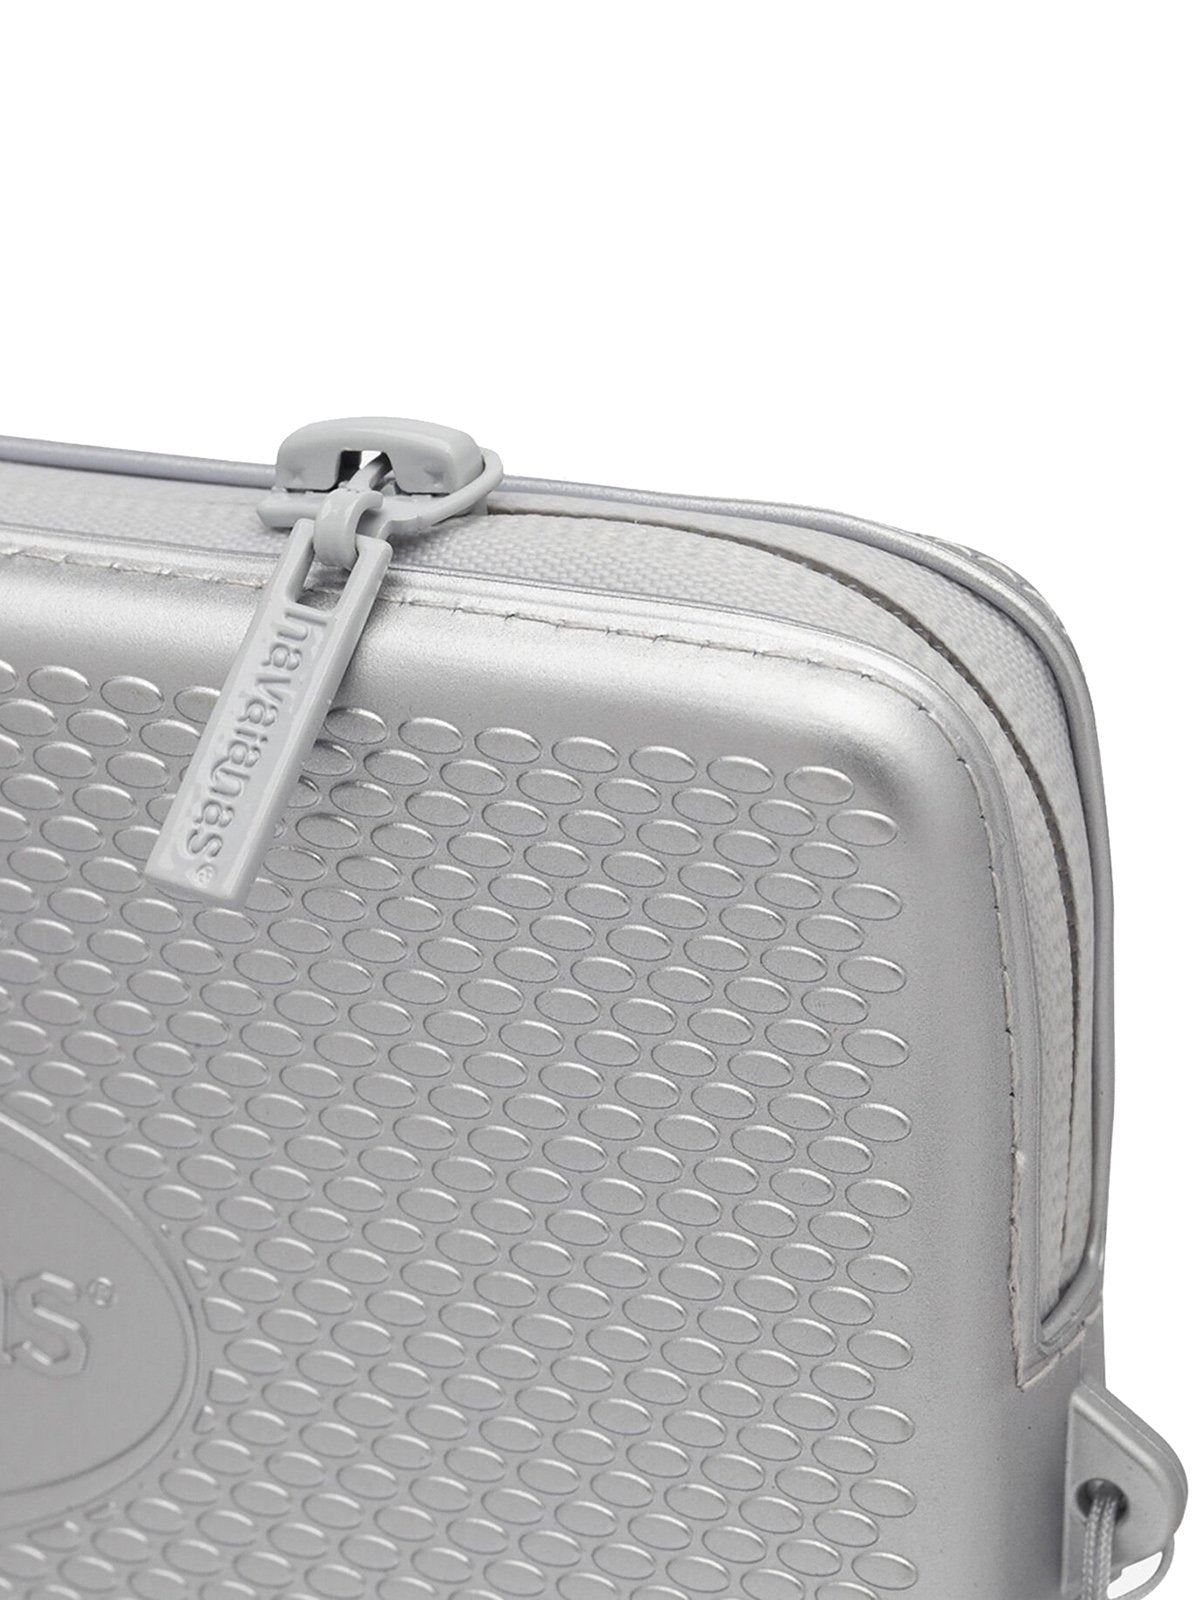 Pochette e Clutch Unisex Havaianas - Mini Bag Plus Cool Metallic - Argento